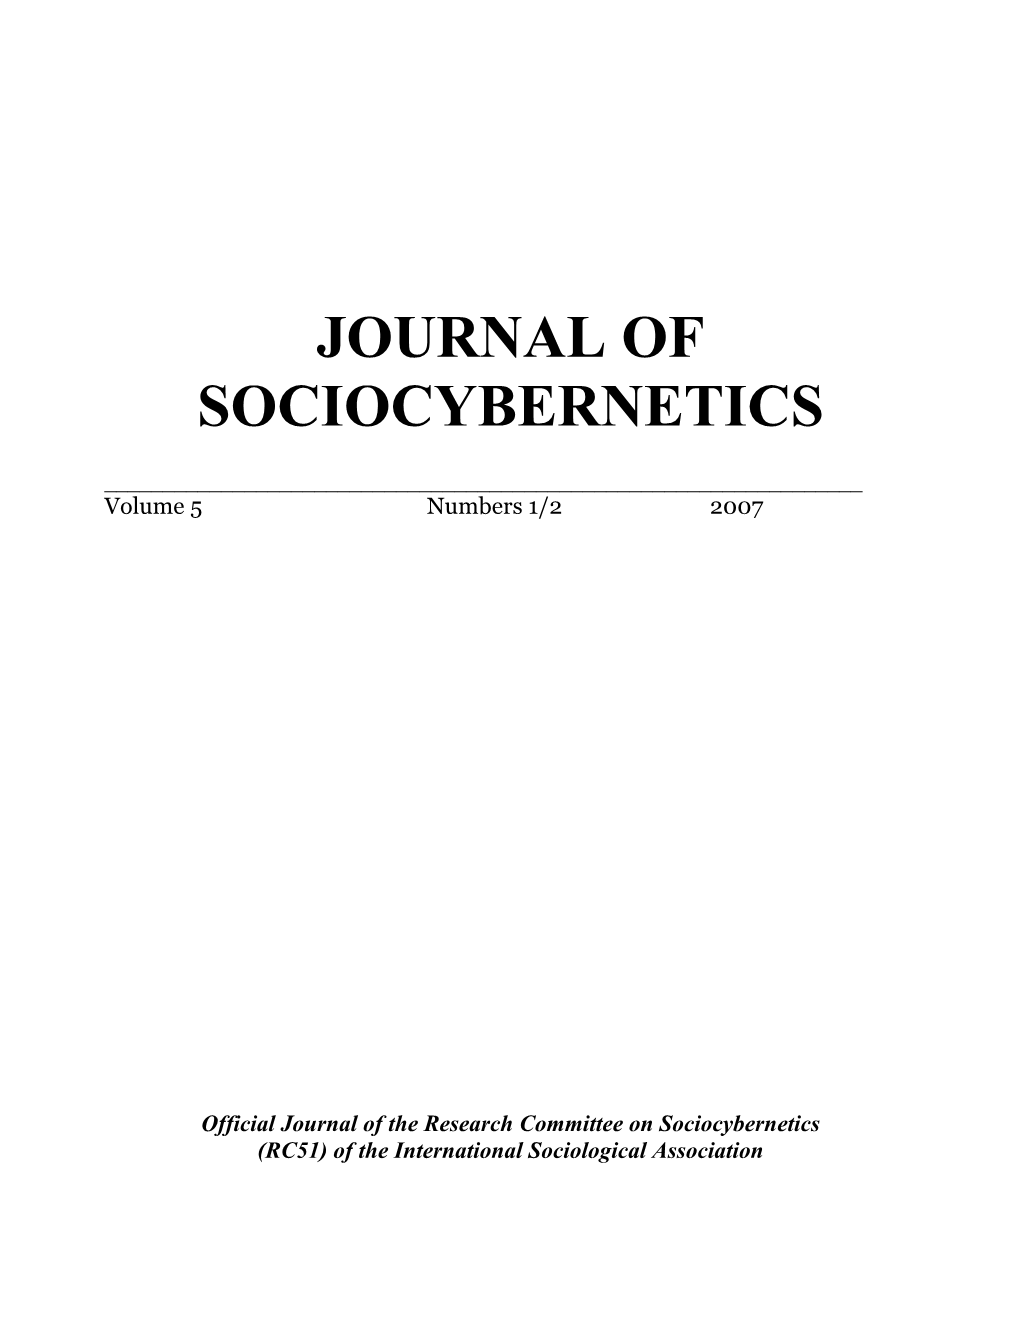 Journal of Sociocybernetics